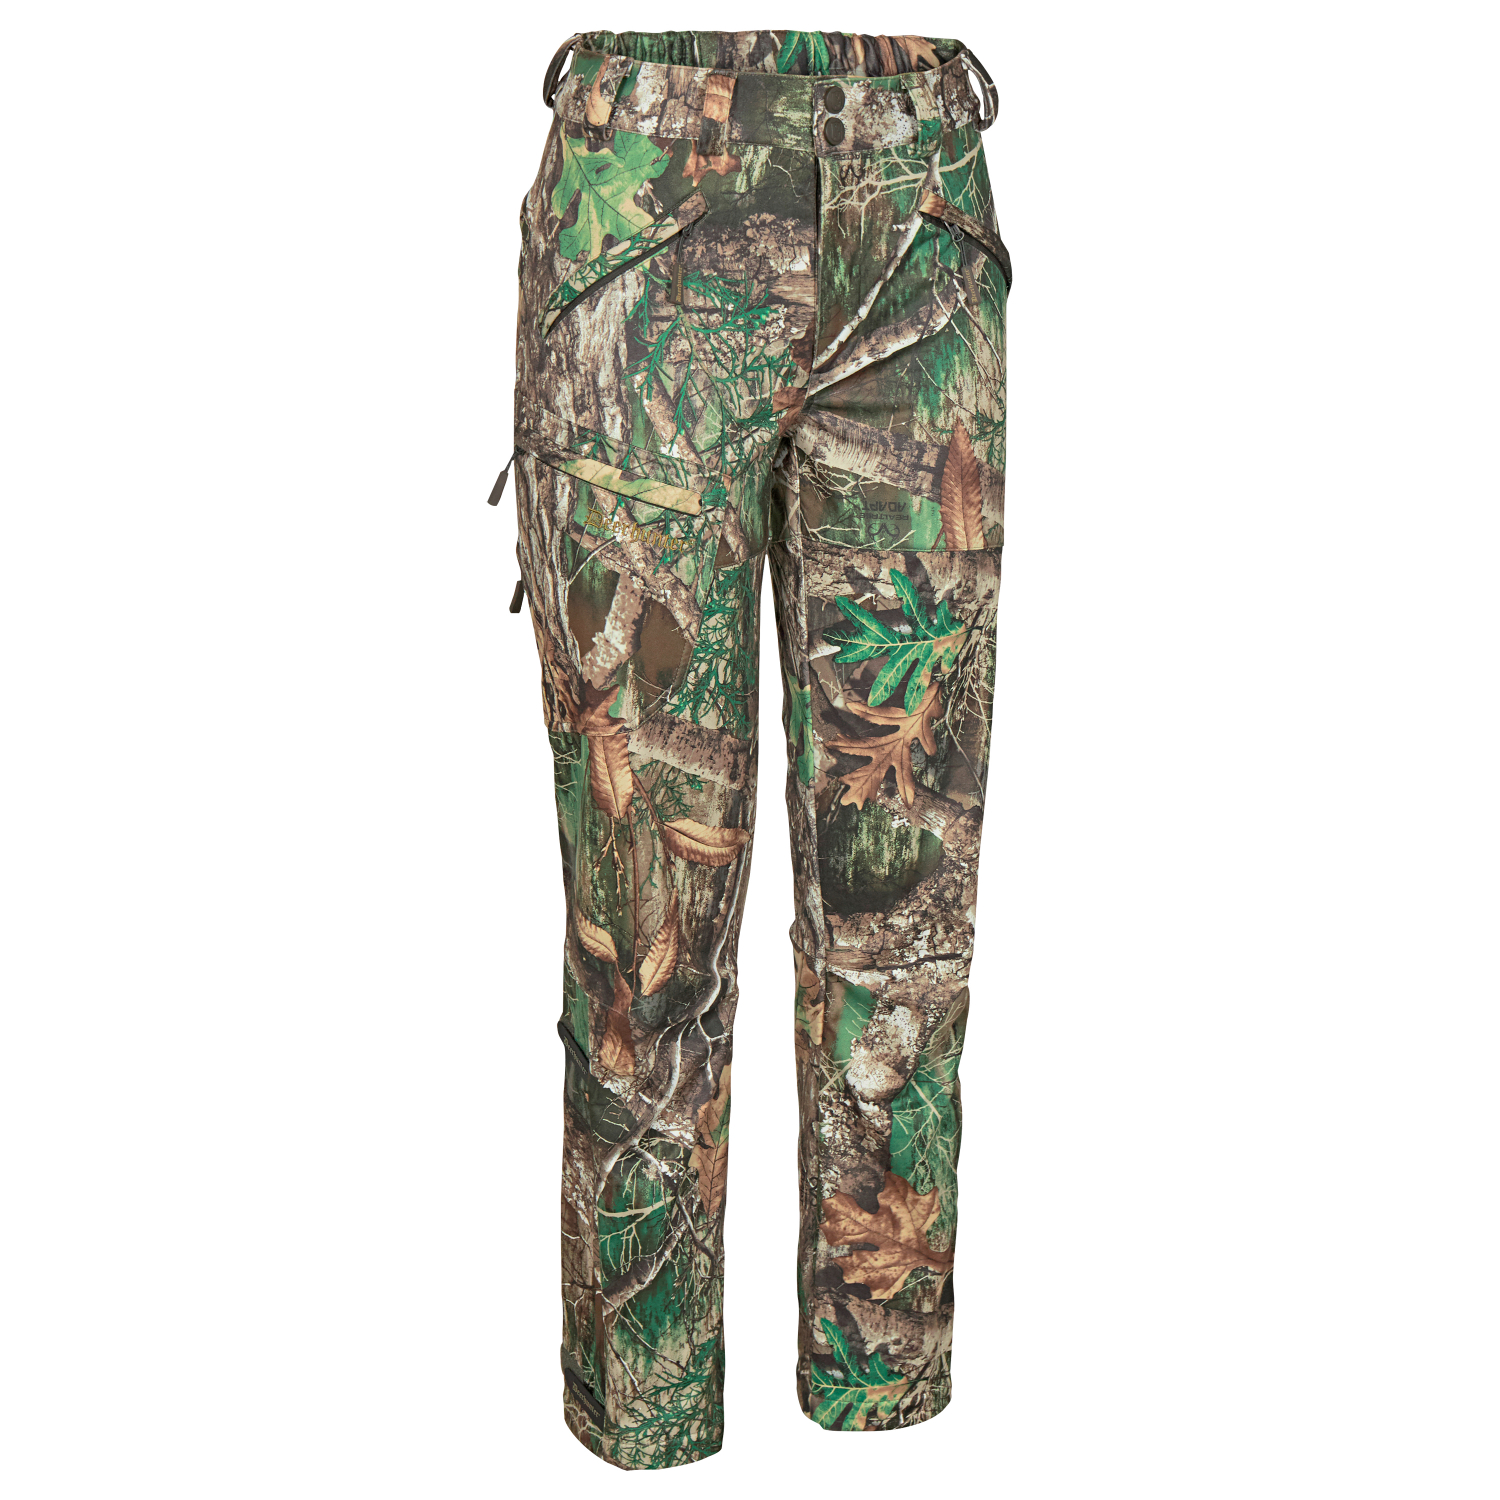 Deerhunter Womens Outdoor pants April at low prices